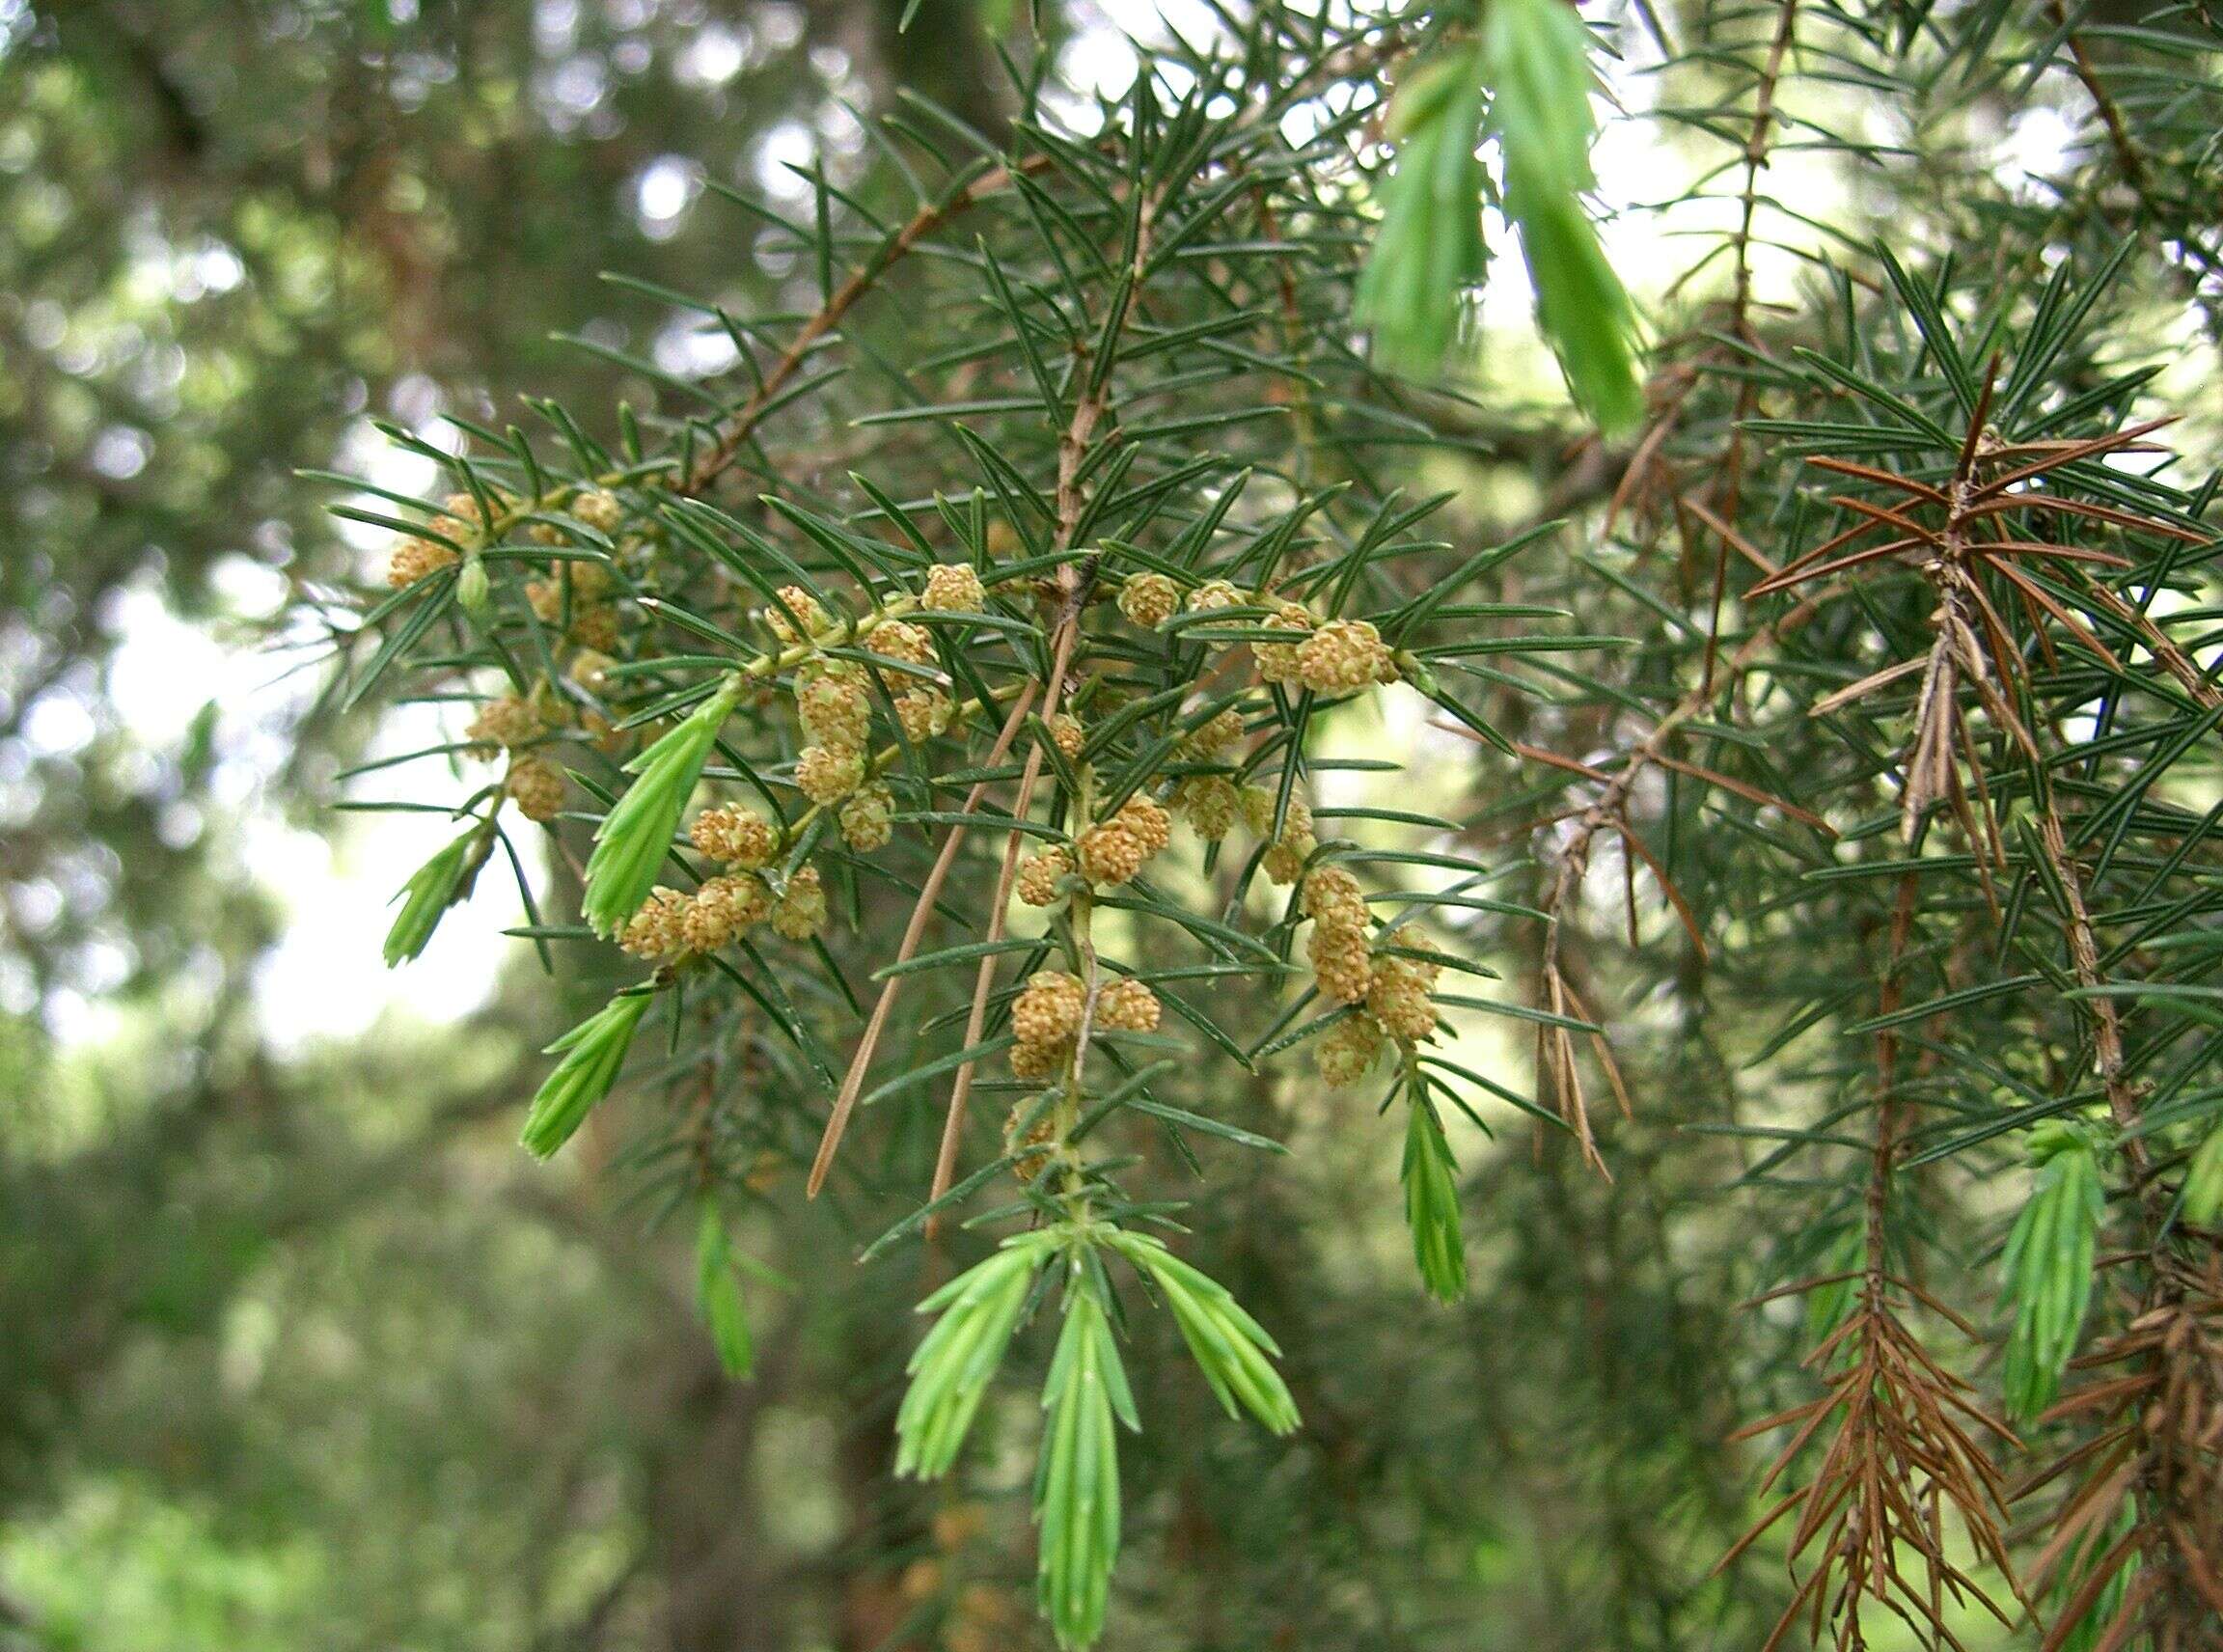 Imagem de Juniperus rigida Siebold & Zucc.